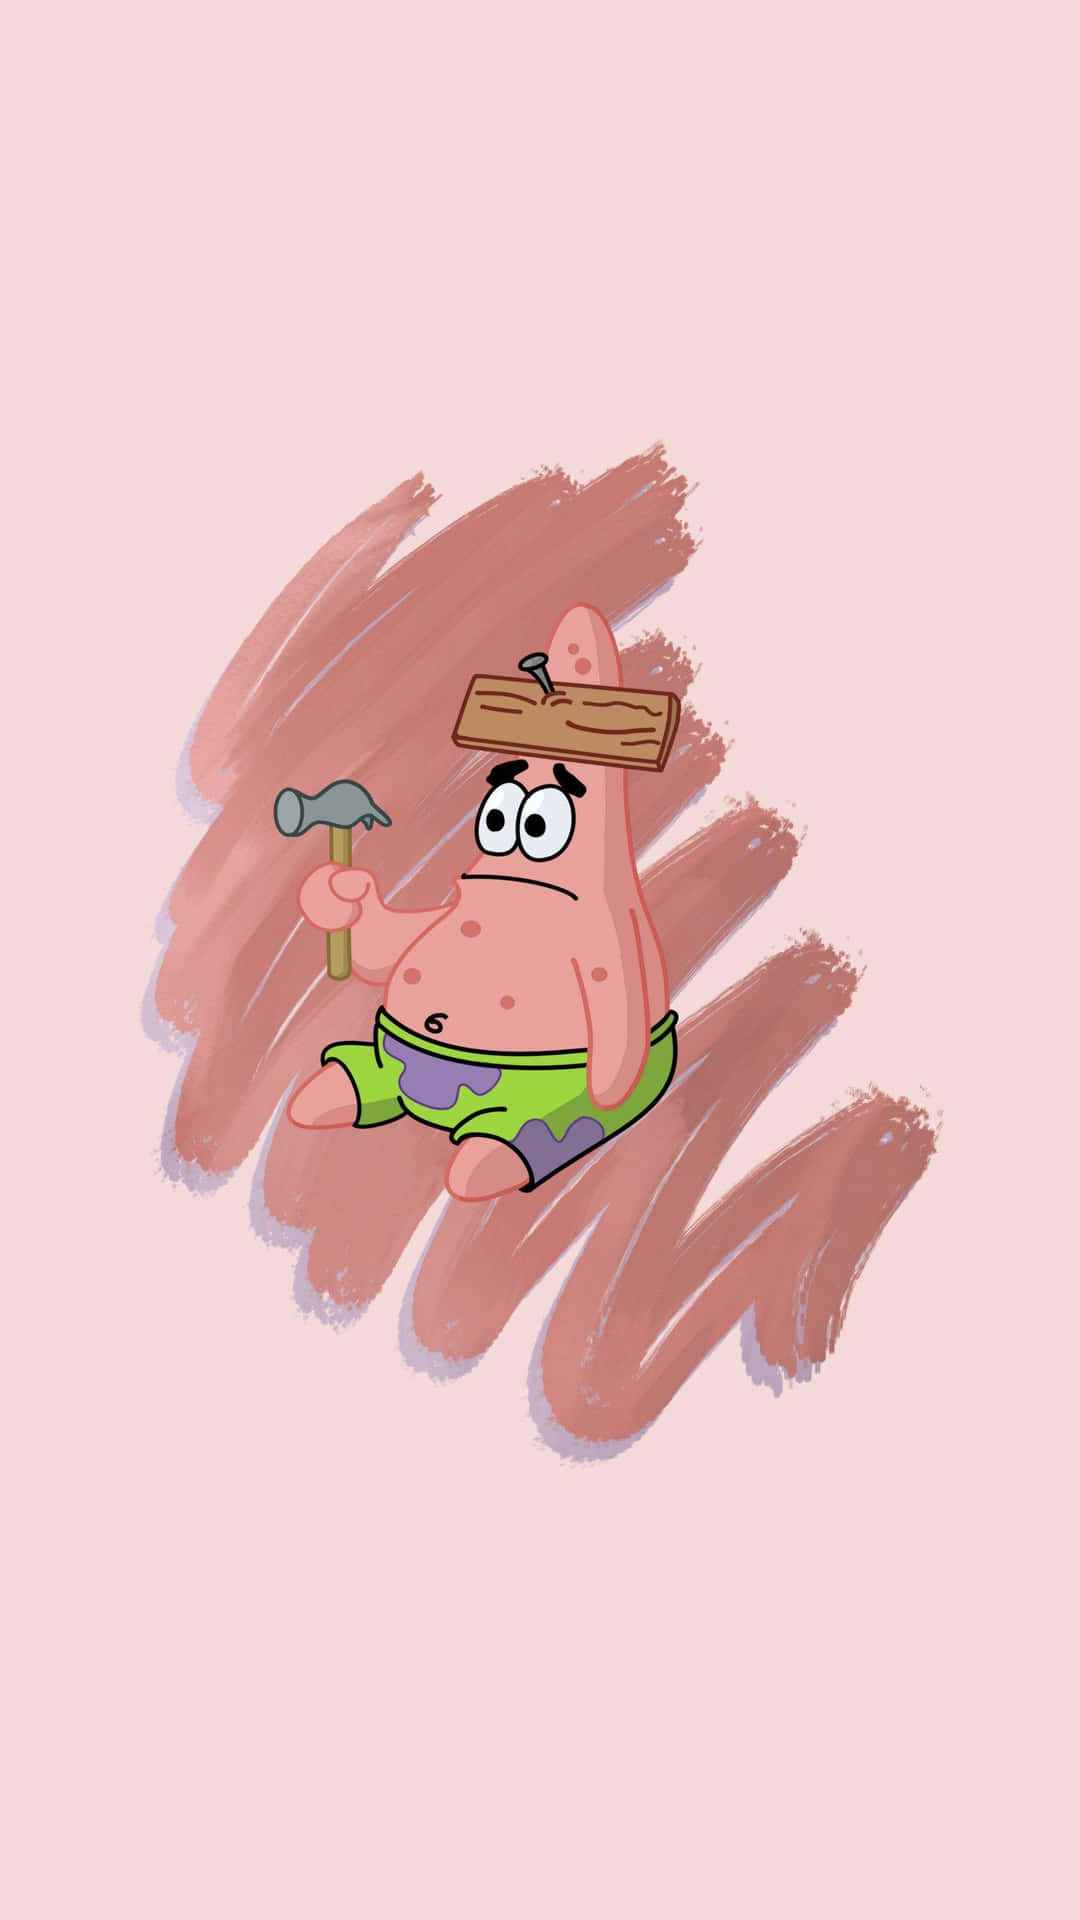 Patrick, The Friendly Starfish From Spongebob, Ready To Take Adventure!